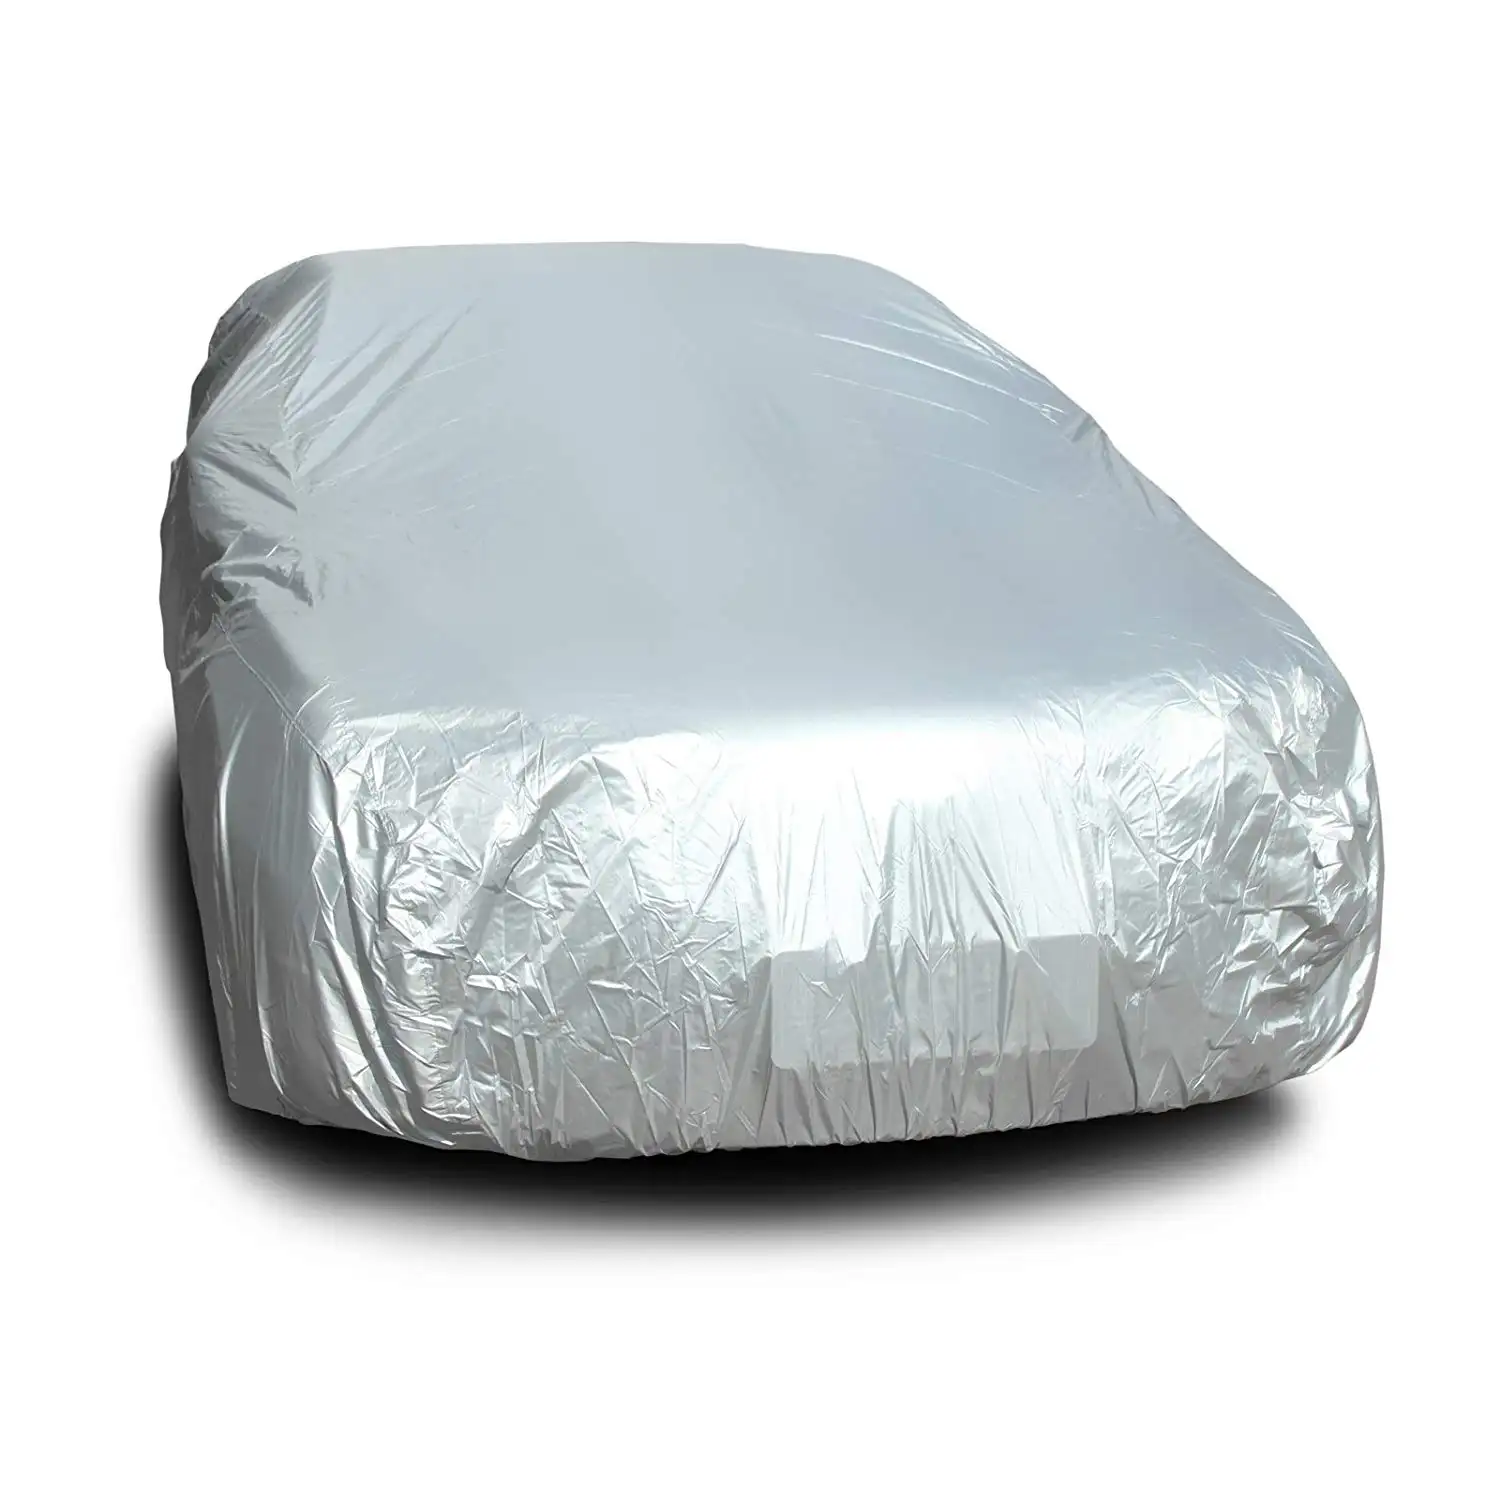 universal sunproof anti-dust Snow Waterproof fabric automatic car cover